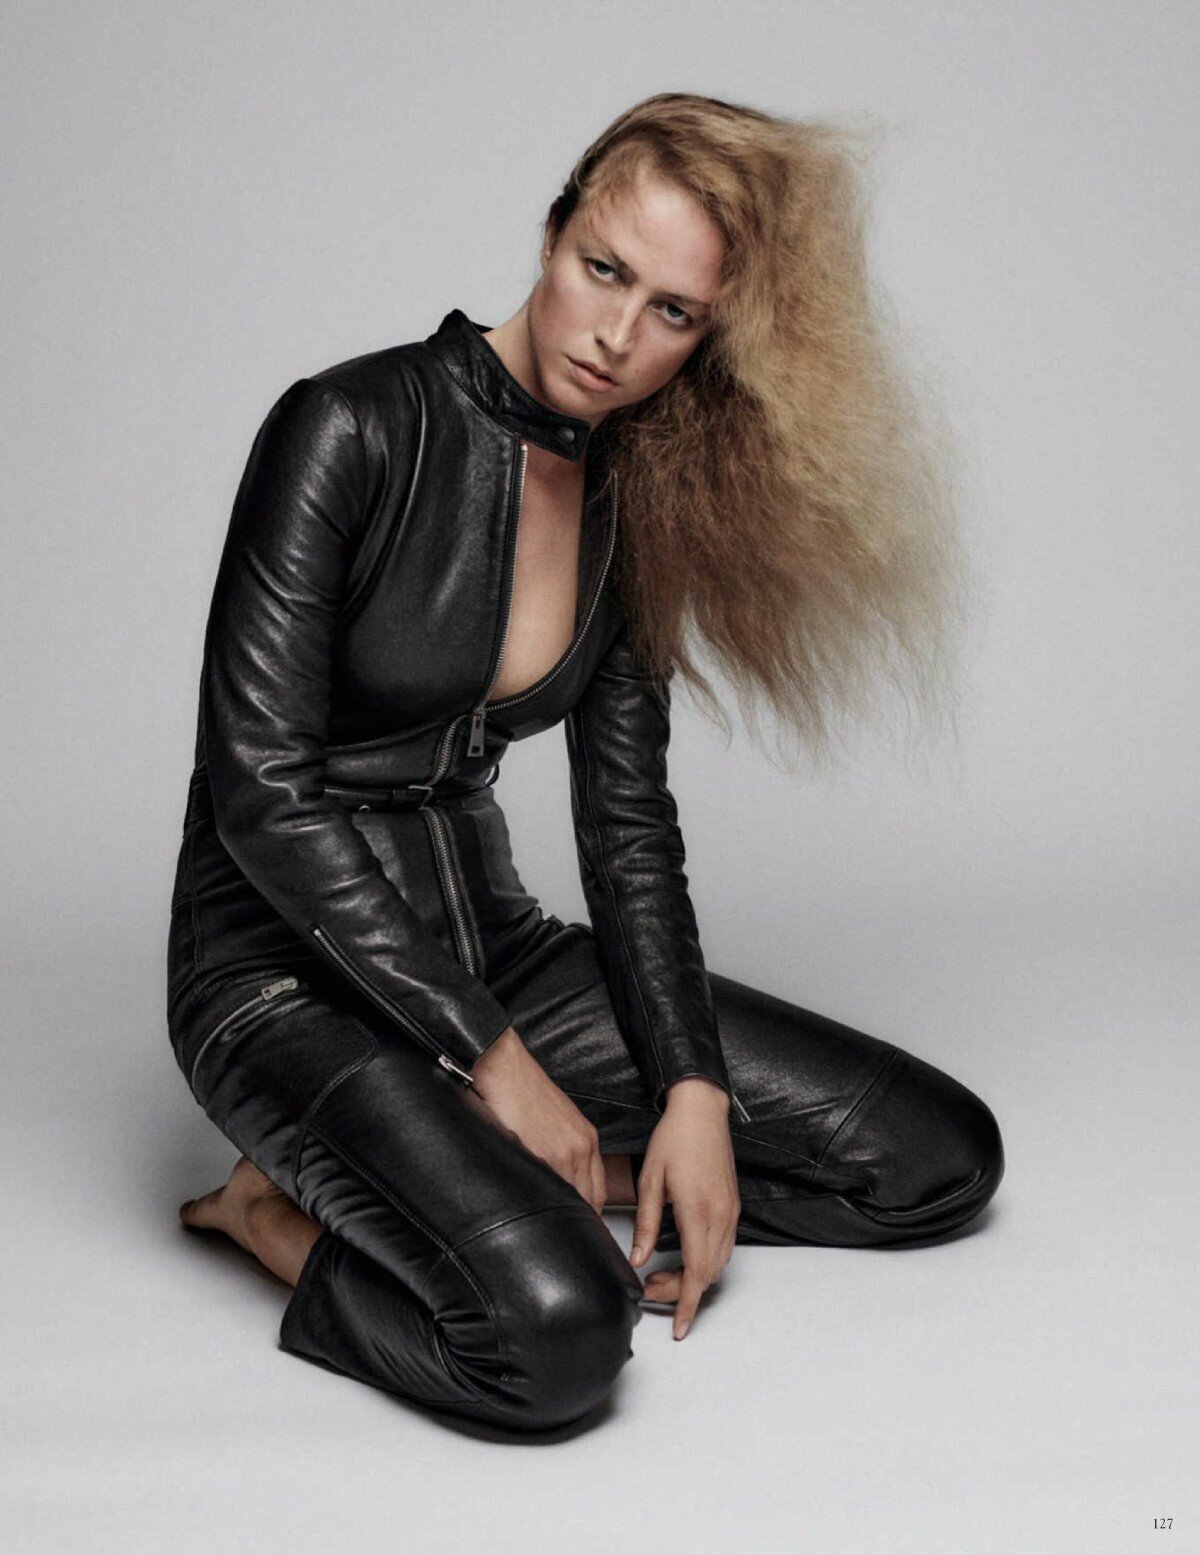 Raquel Zimmermann by Chris Colls for Vogue Germany Nov 2020 (16).jpg